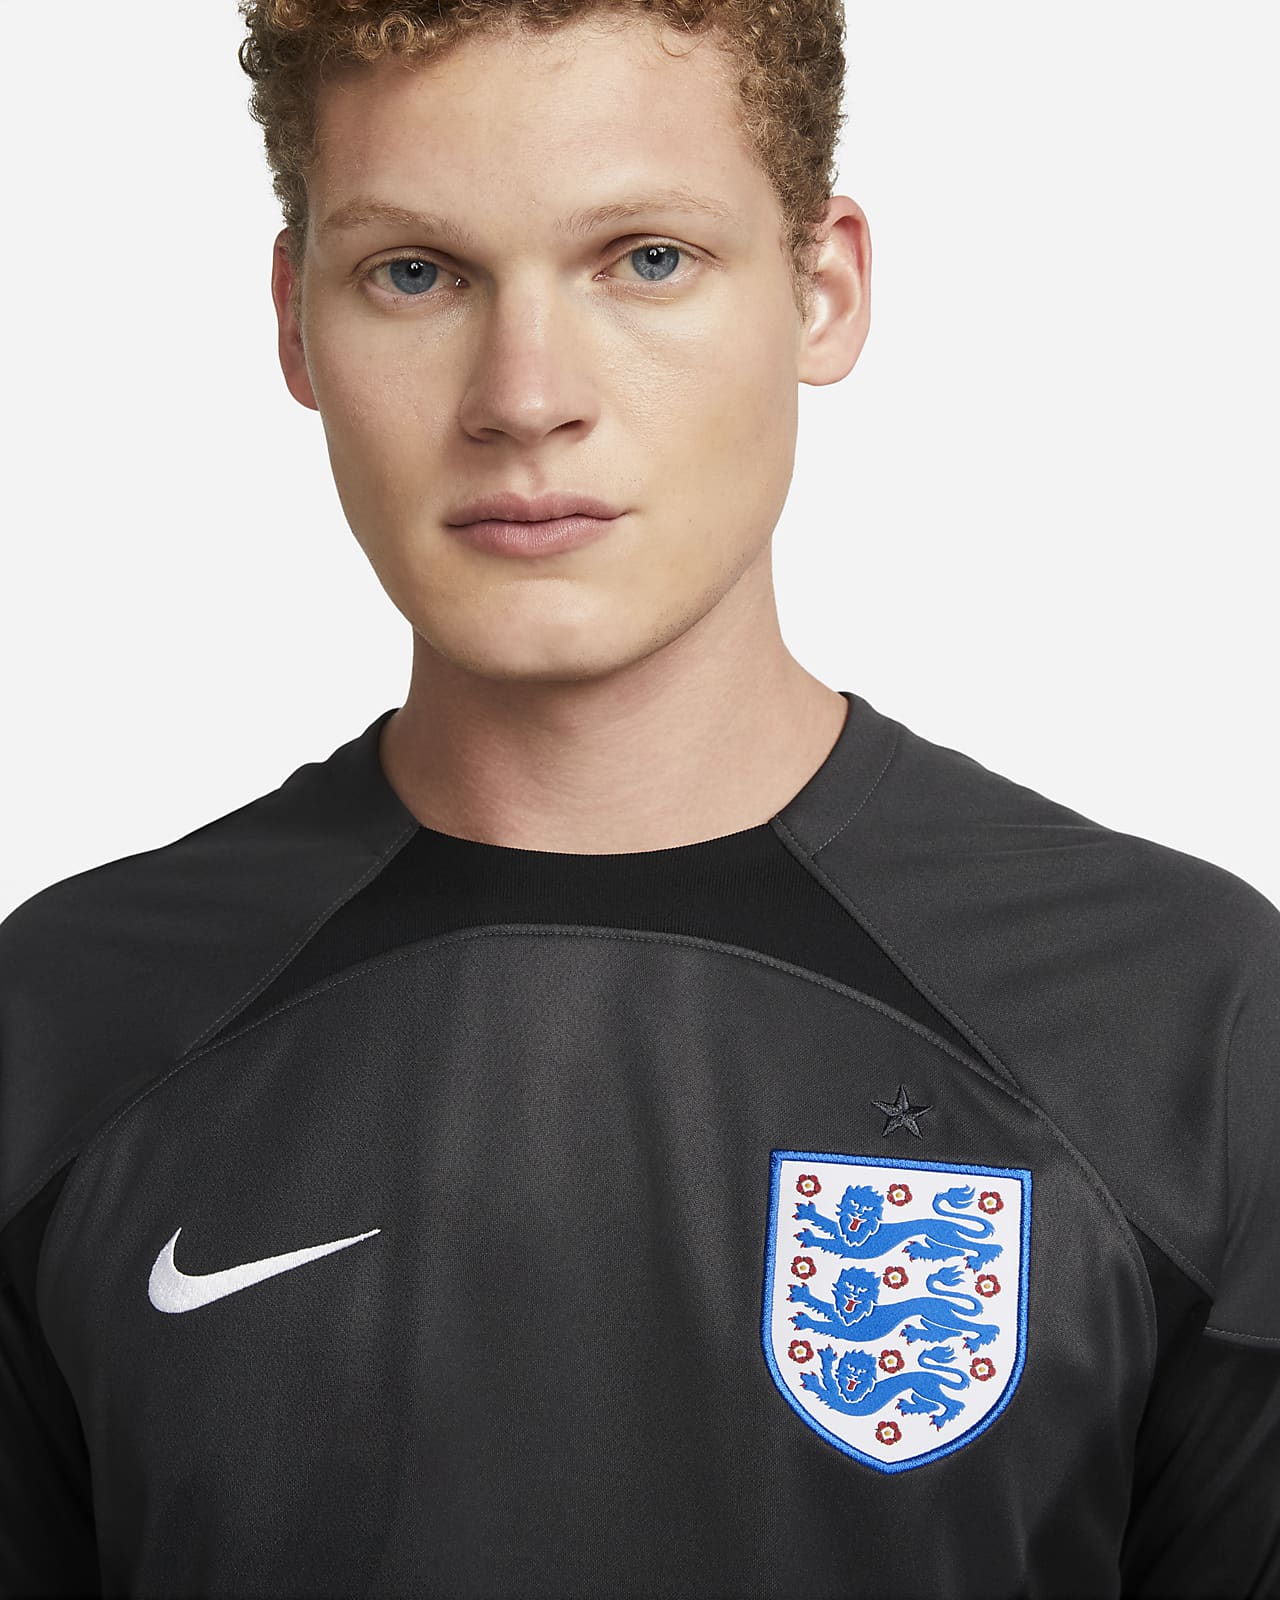 England Stadium Goalkeeper Men's Nike Dri-FIT Football Shirt. Nike LU